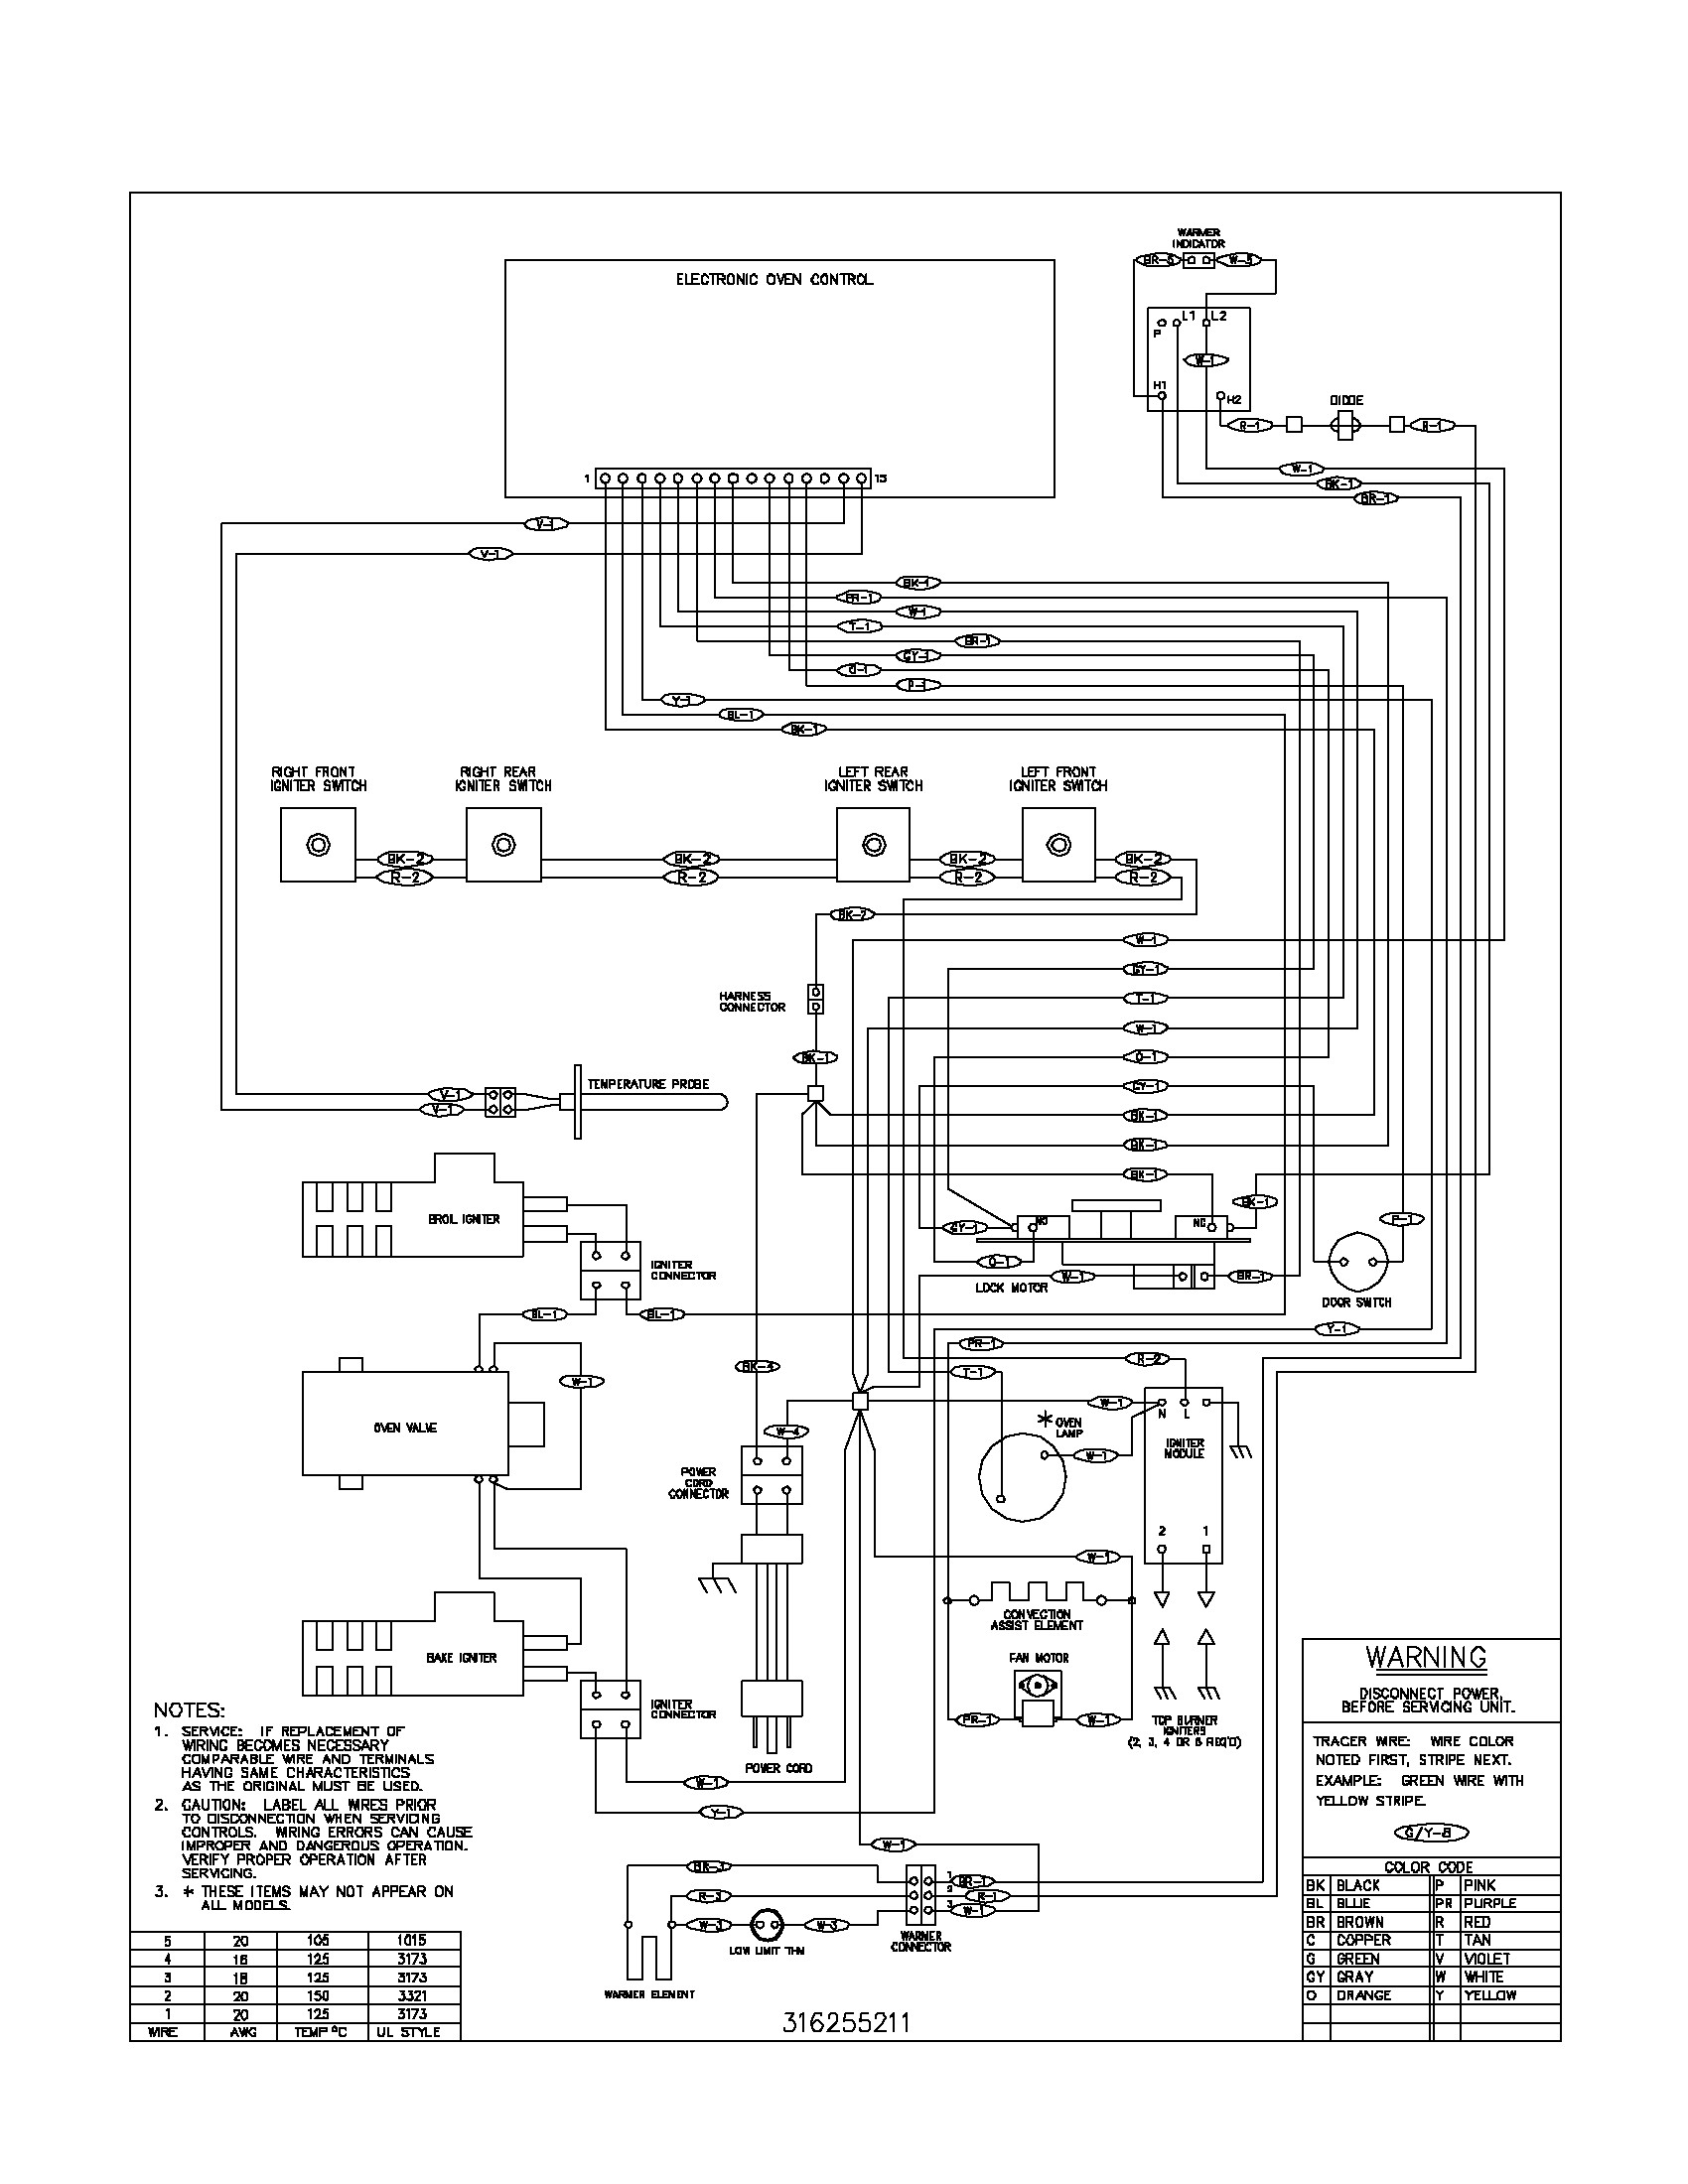 Wiring Diagram For Frigidaire Refrigerator Wiring Diagram Best Ideas